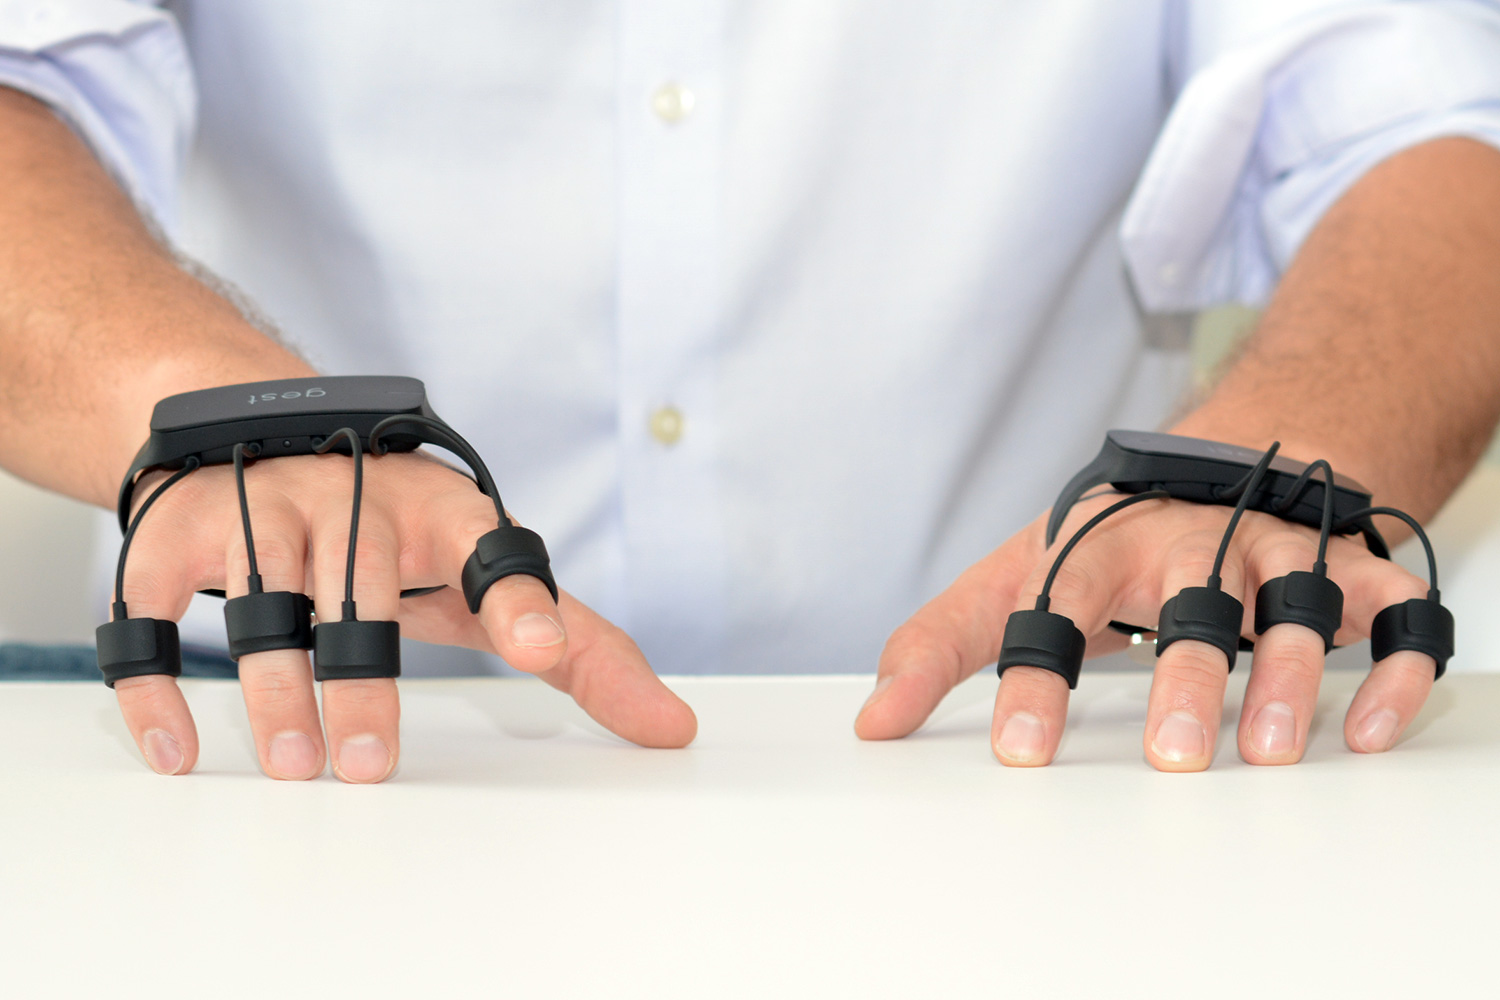 gest gesture sensing glove kickstarter thumb